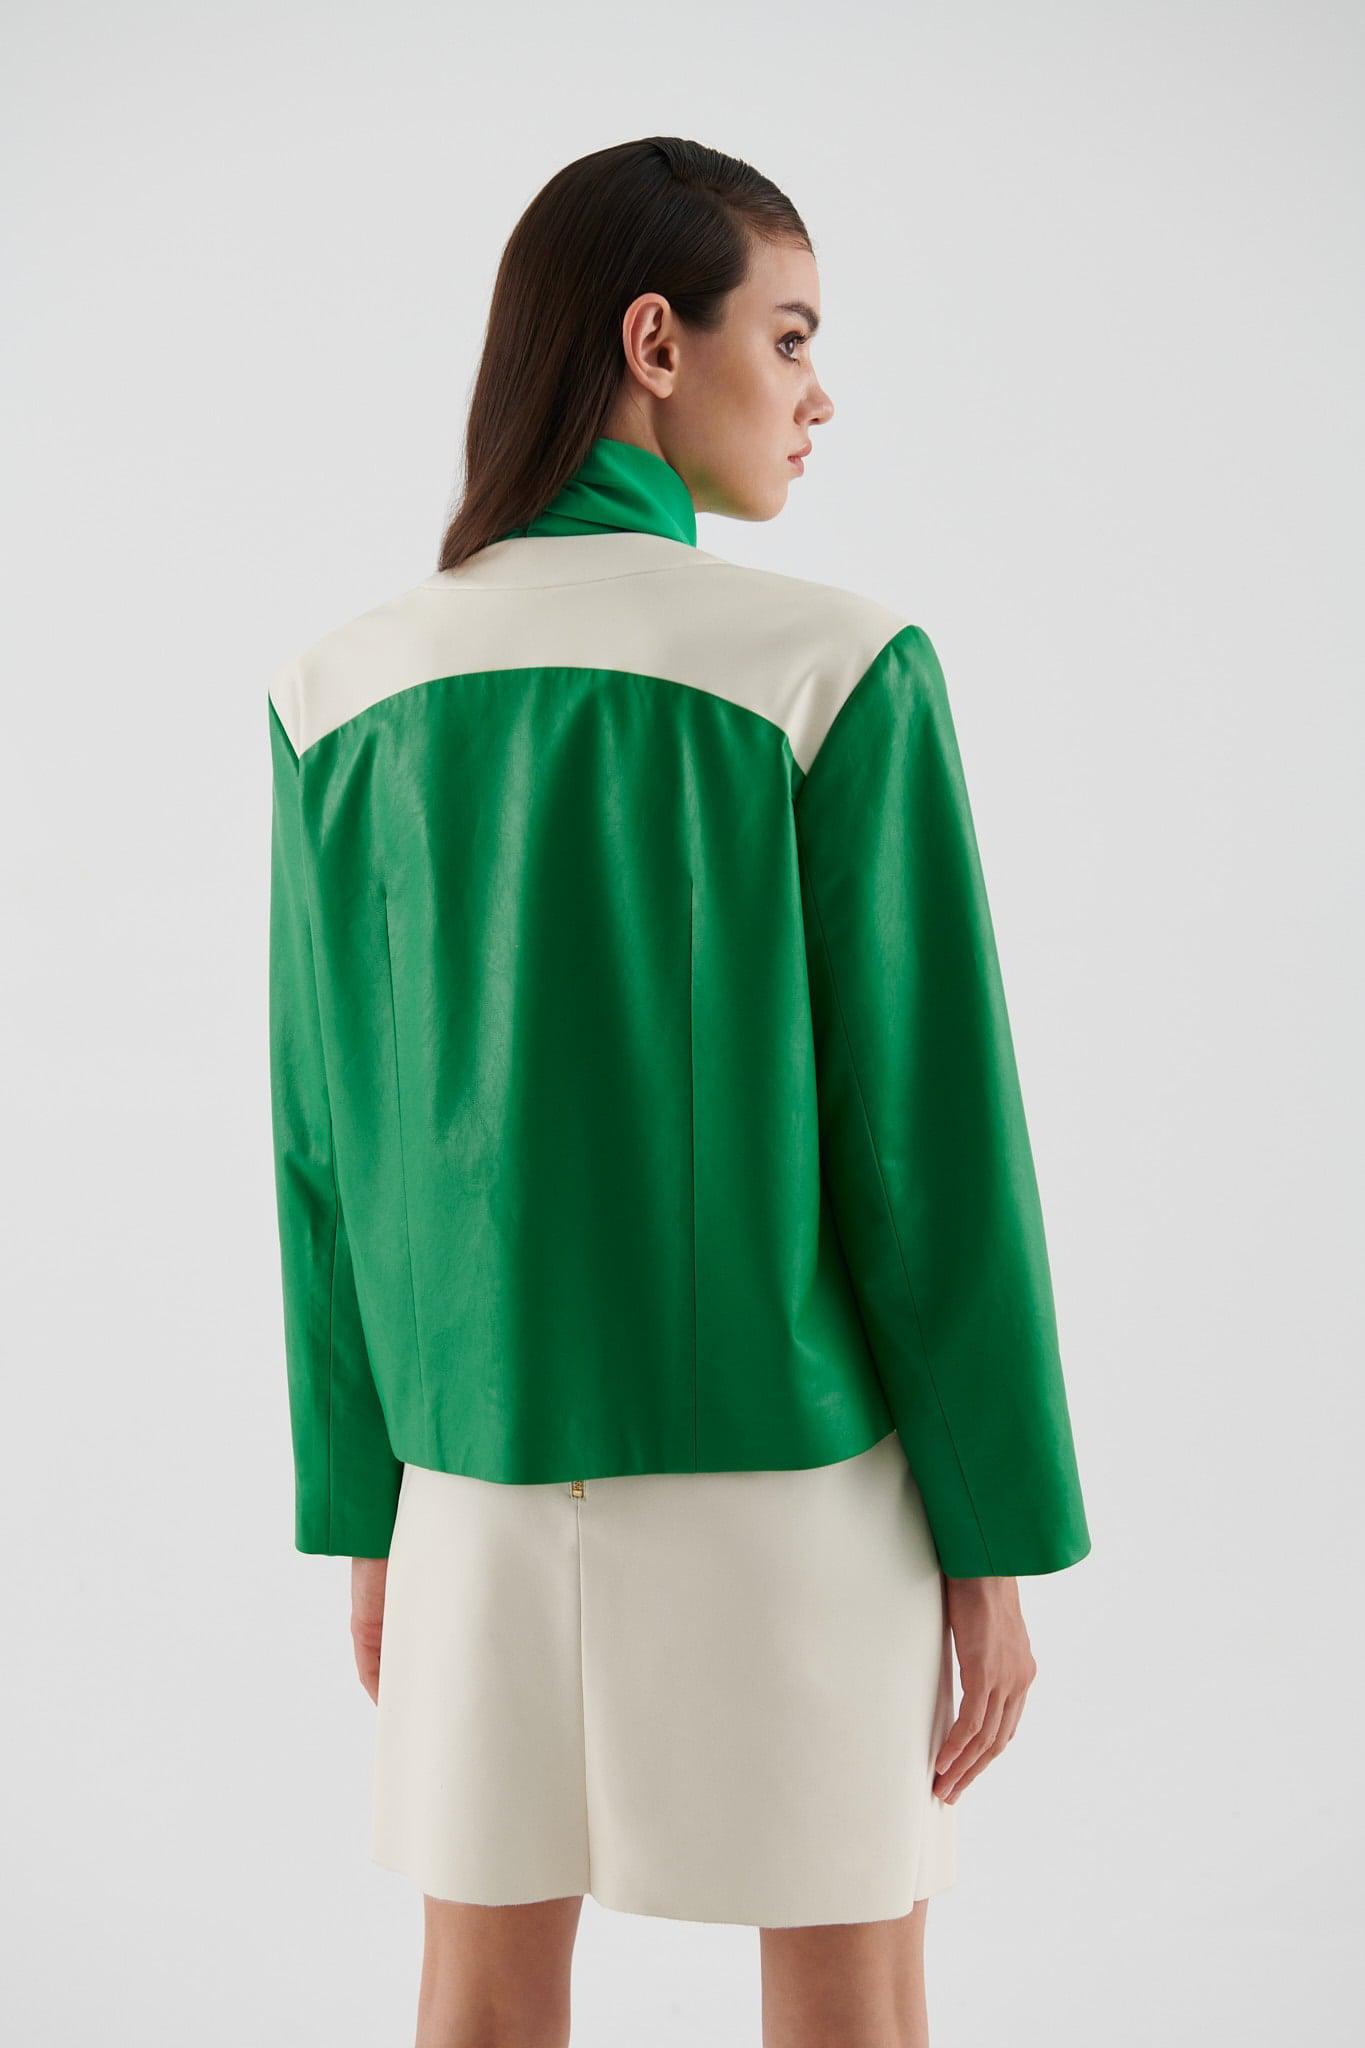 Zippered Green White Women's Jacket --[GREEN]